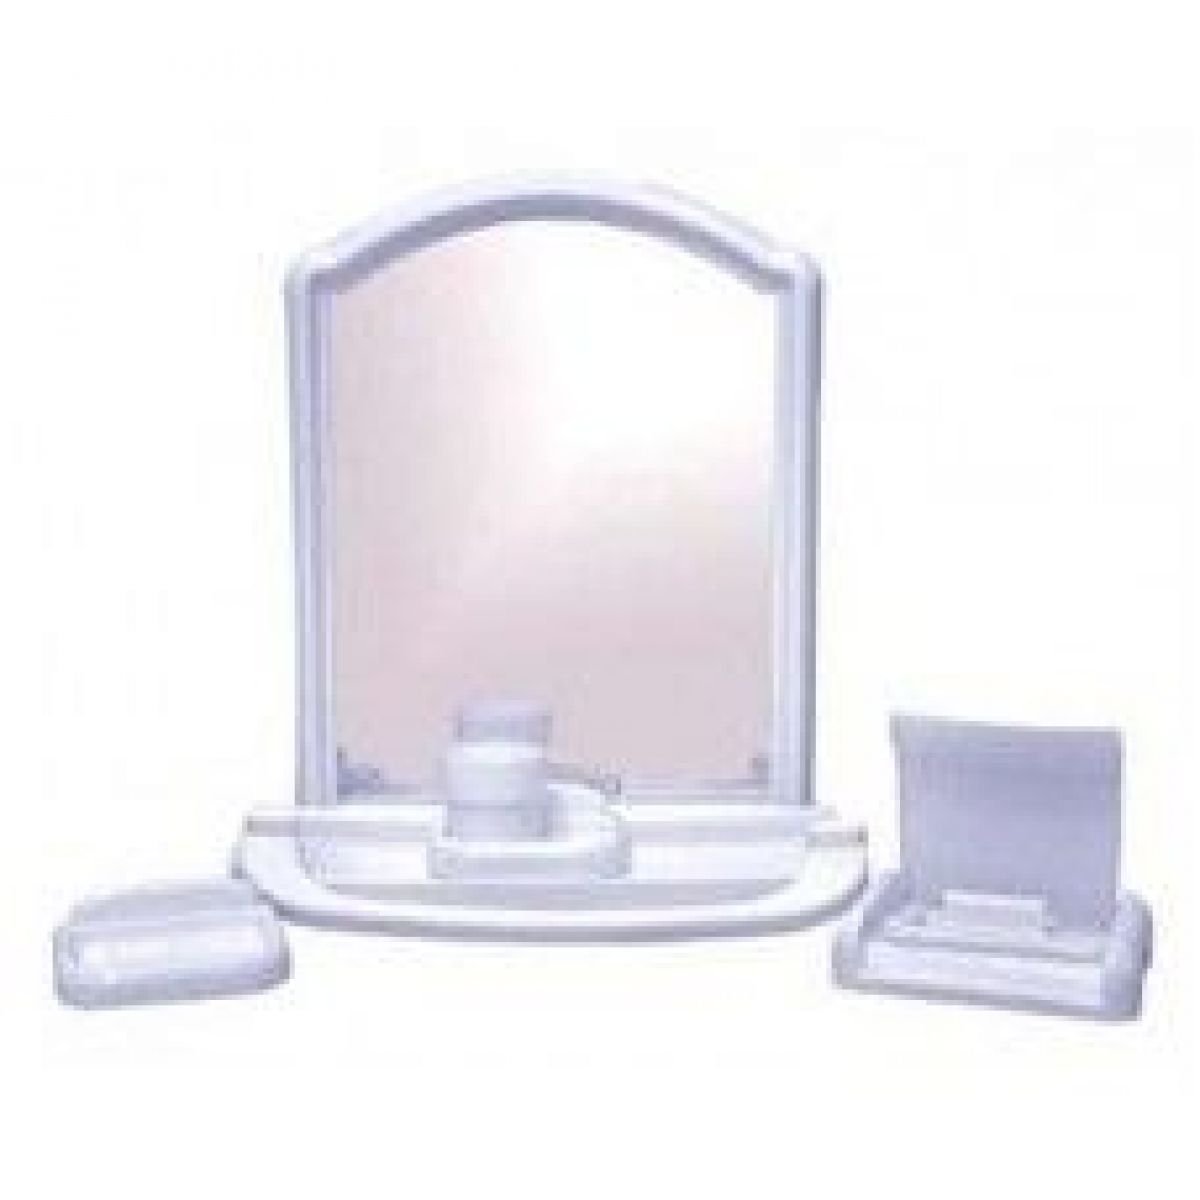 Комплект для ванны с зеркалом. Зеркальный набор для ванной комнаты артикул РП-861. Зеркальный набор Orio белый.